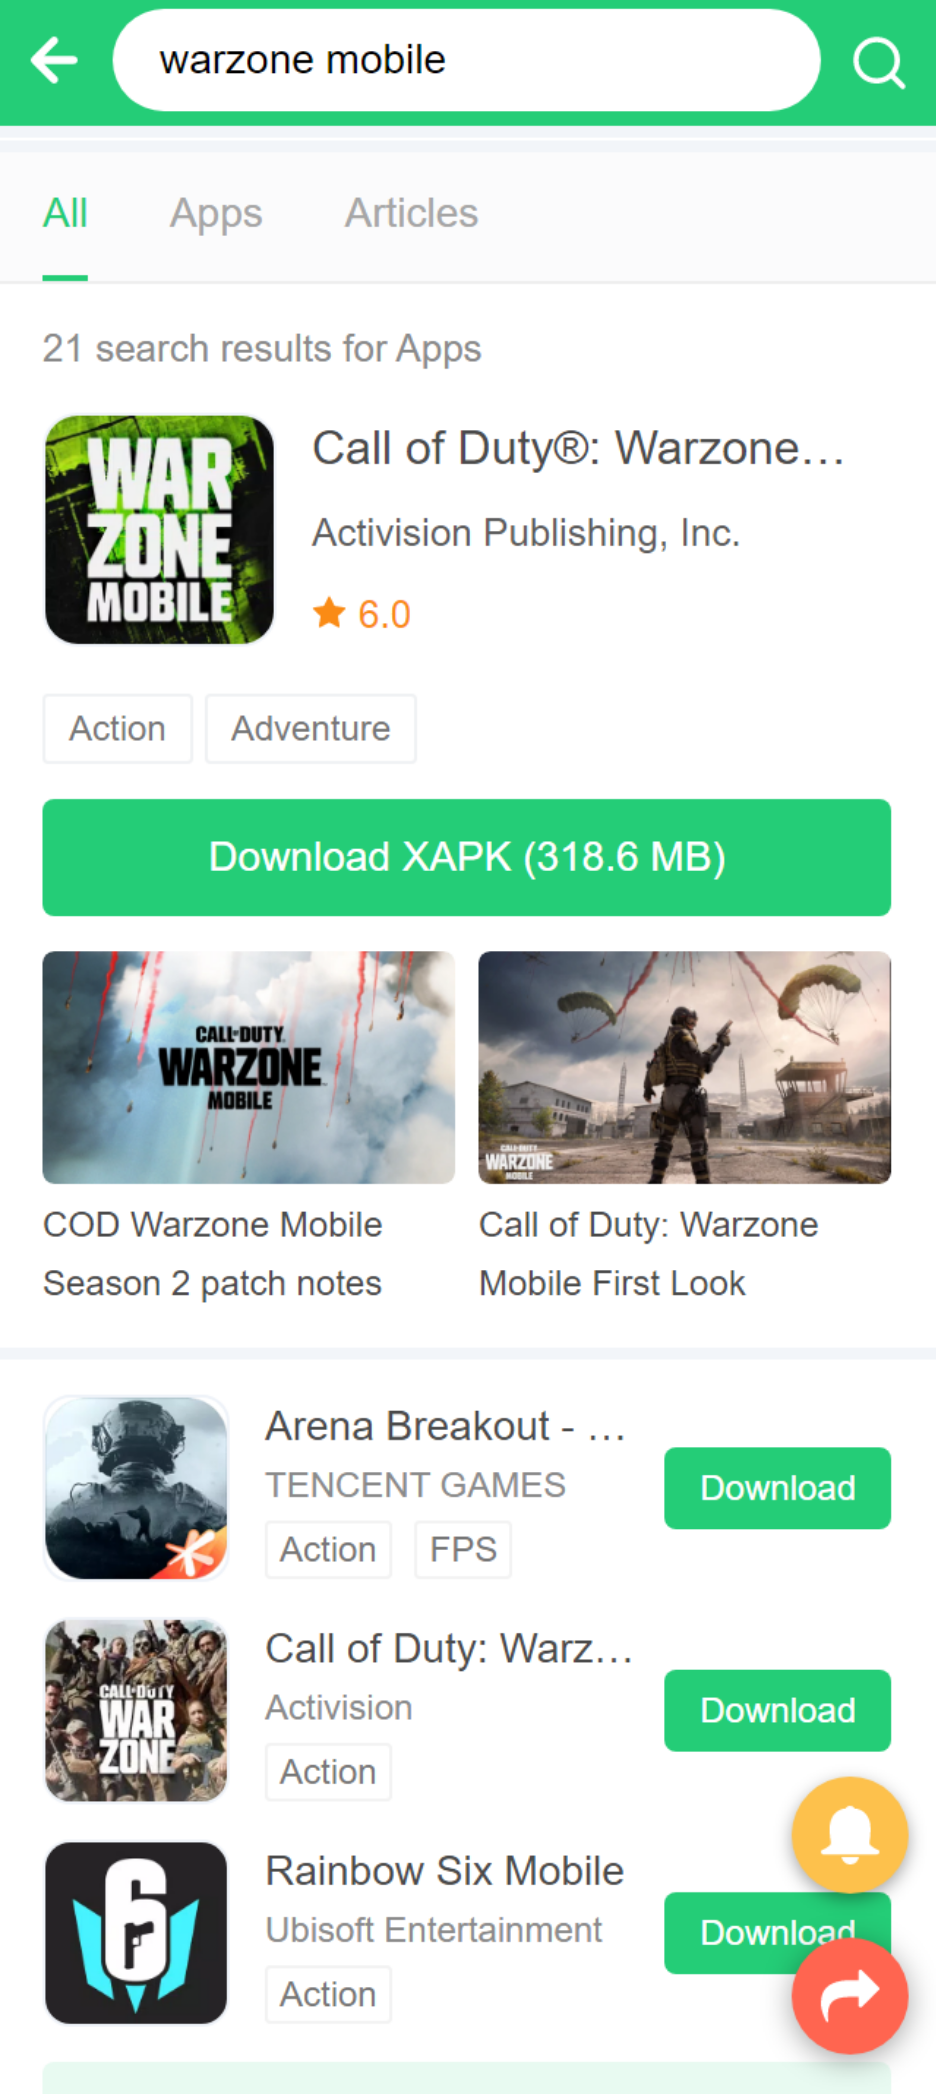 COD WARZONE MOBILE APK - LINK DIRETO - Mobile Gamer